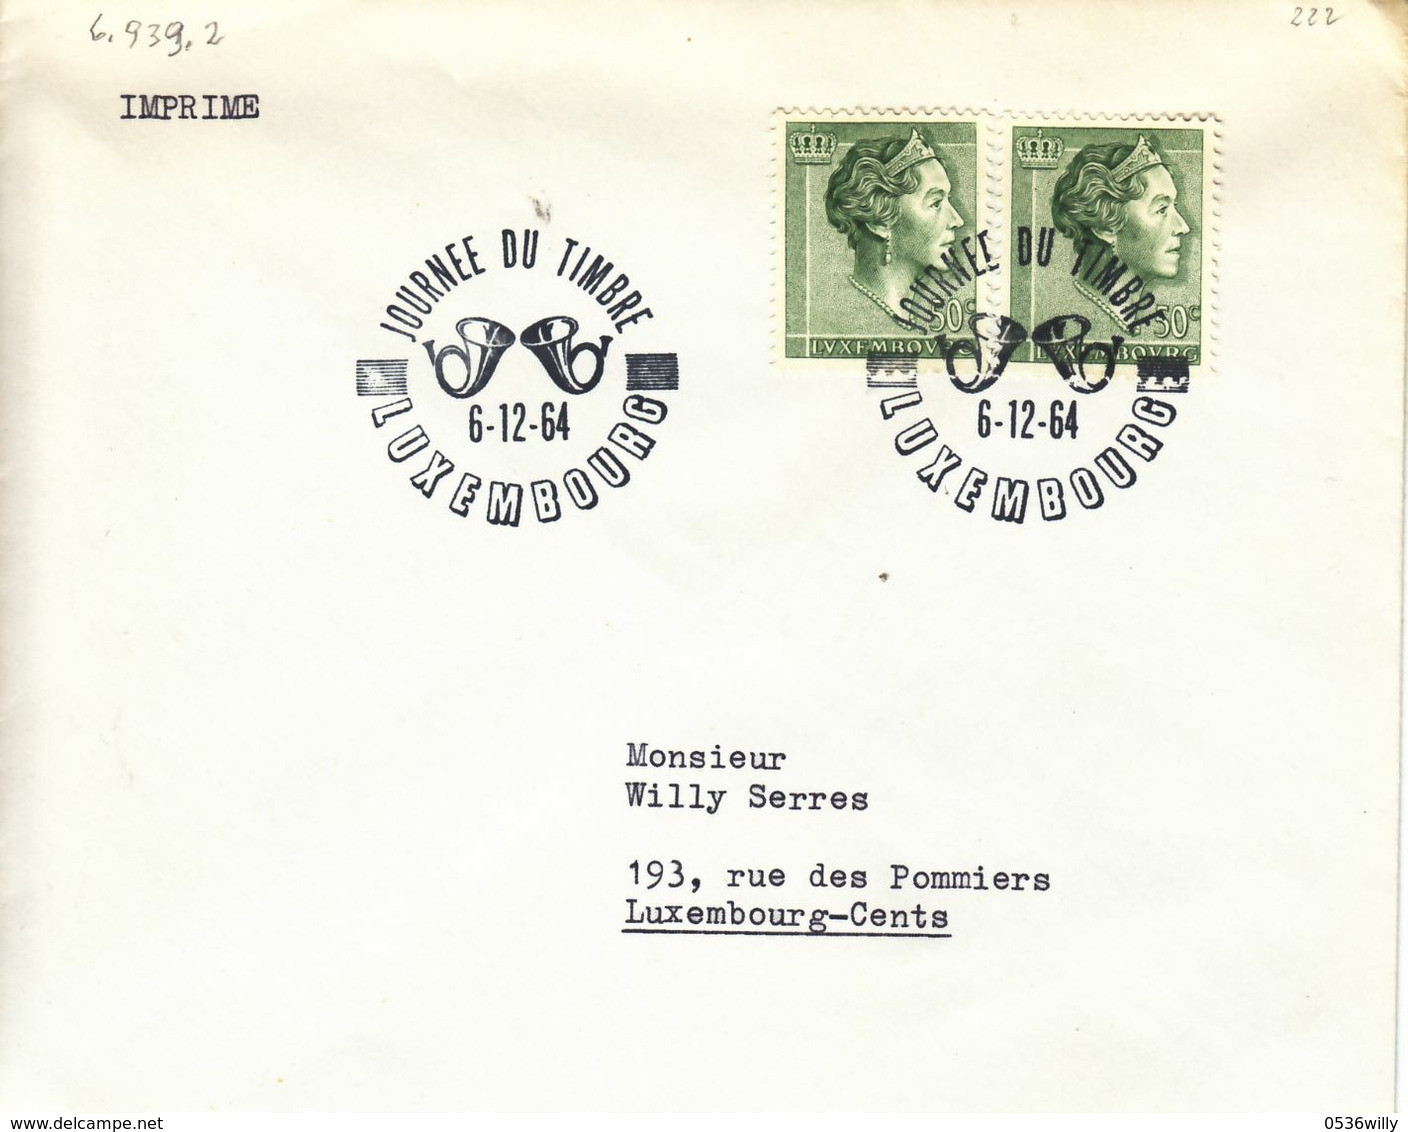 Luxembourg 1964. Journée Du Timbre (6.939.2)á - Covers & Documents